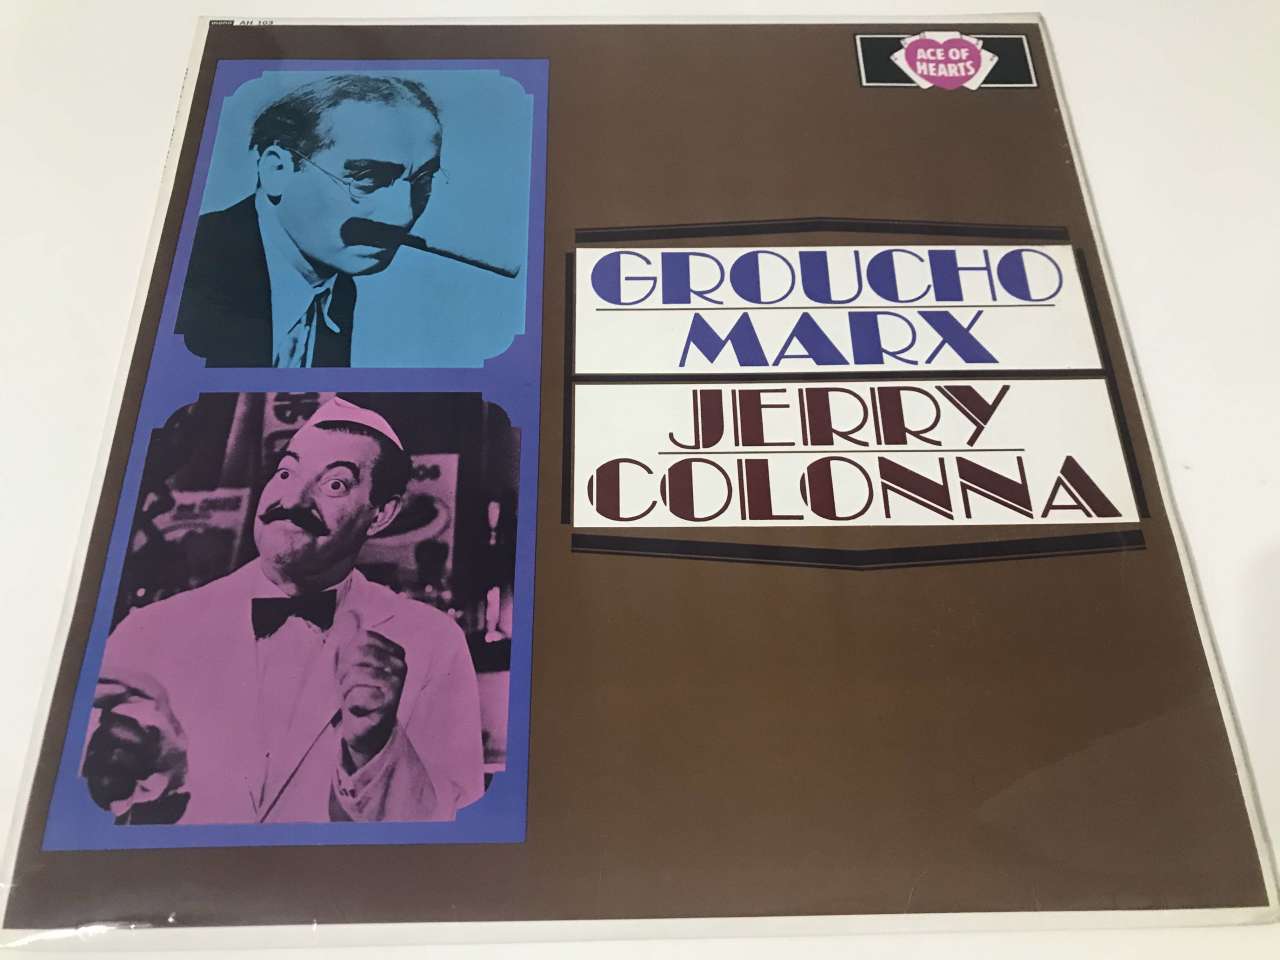 Groucho Marx / Jerry Colonna – Groucho Marx / Jerry Colonna